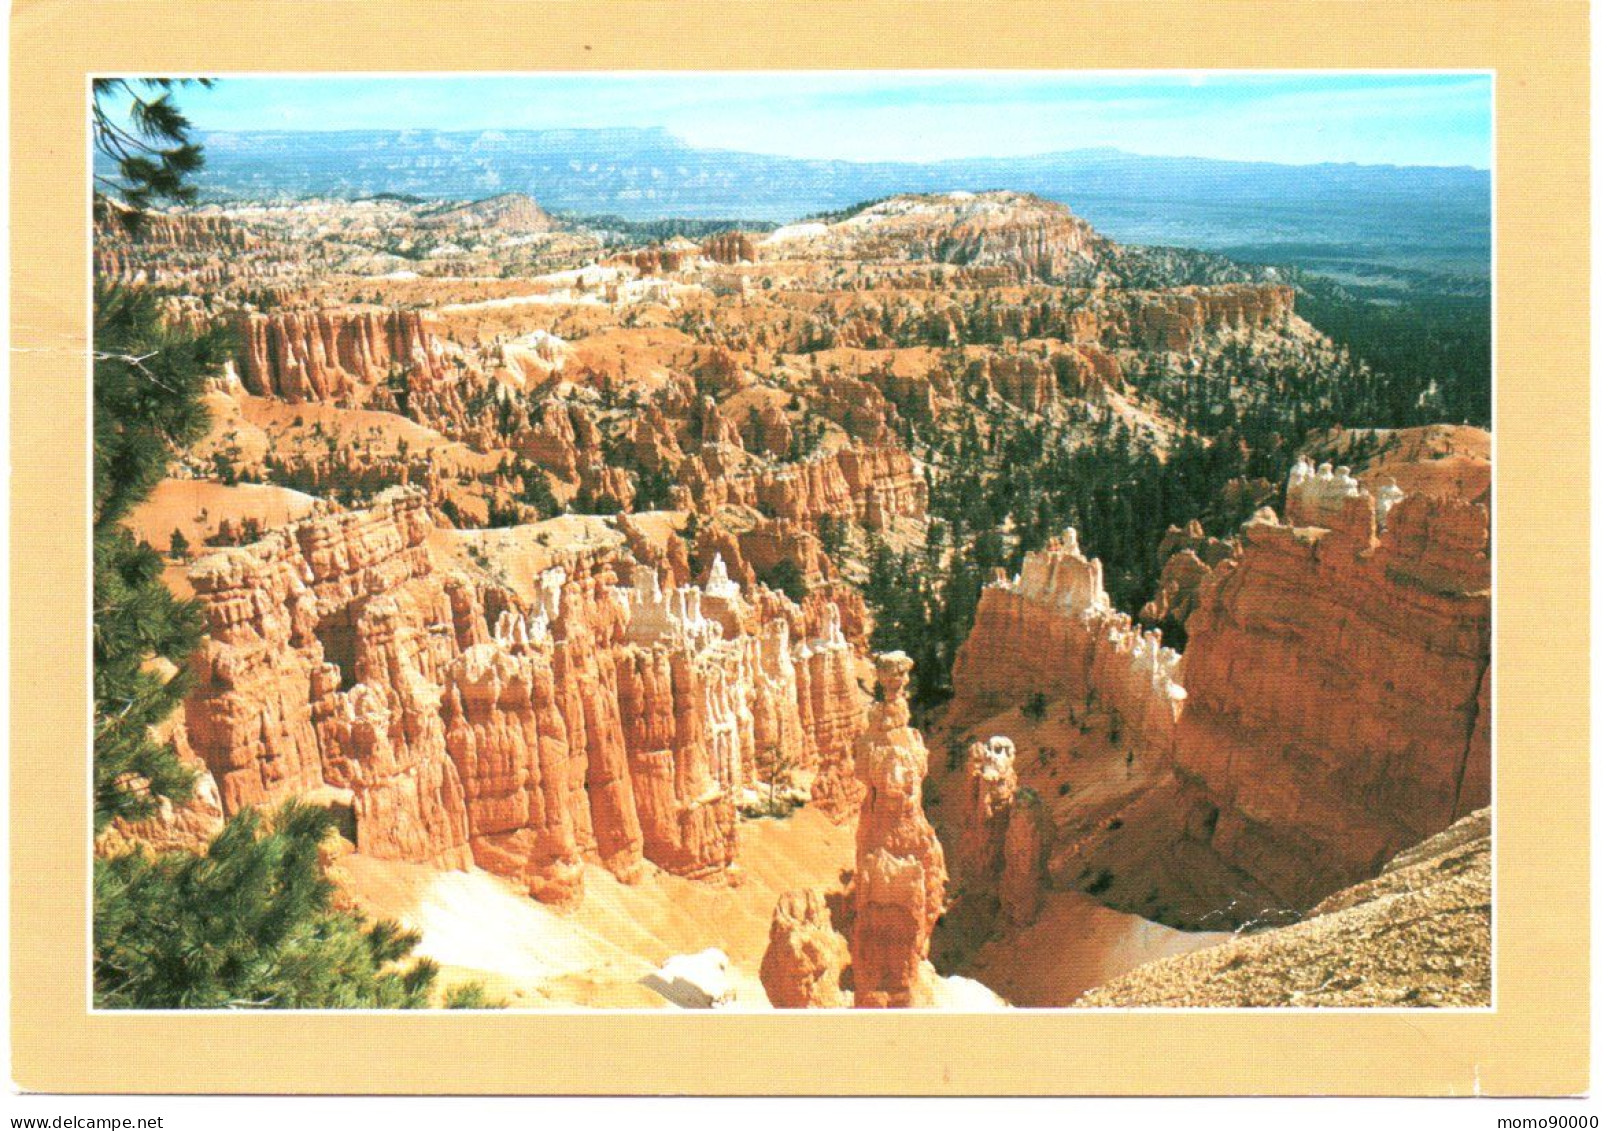 ETATS-UNIS : BRYCE CANYON - Bryce Canyon